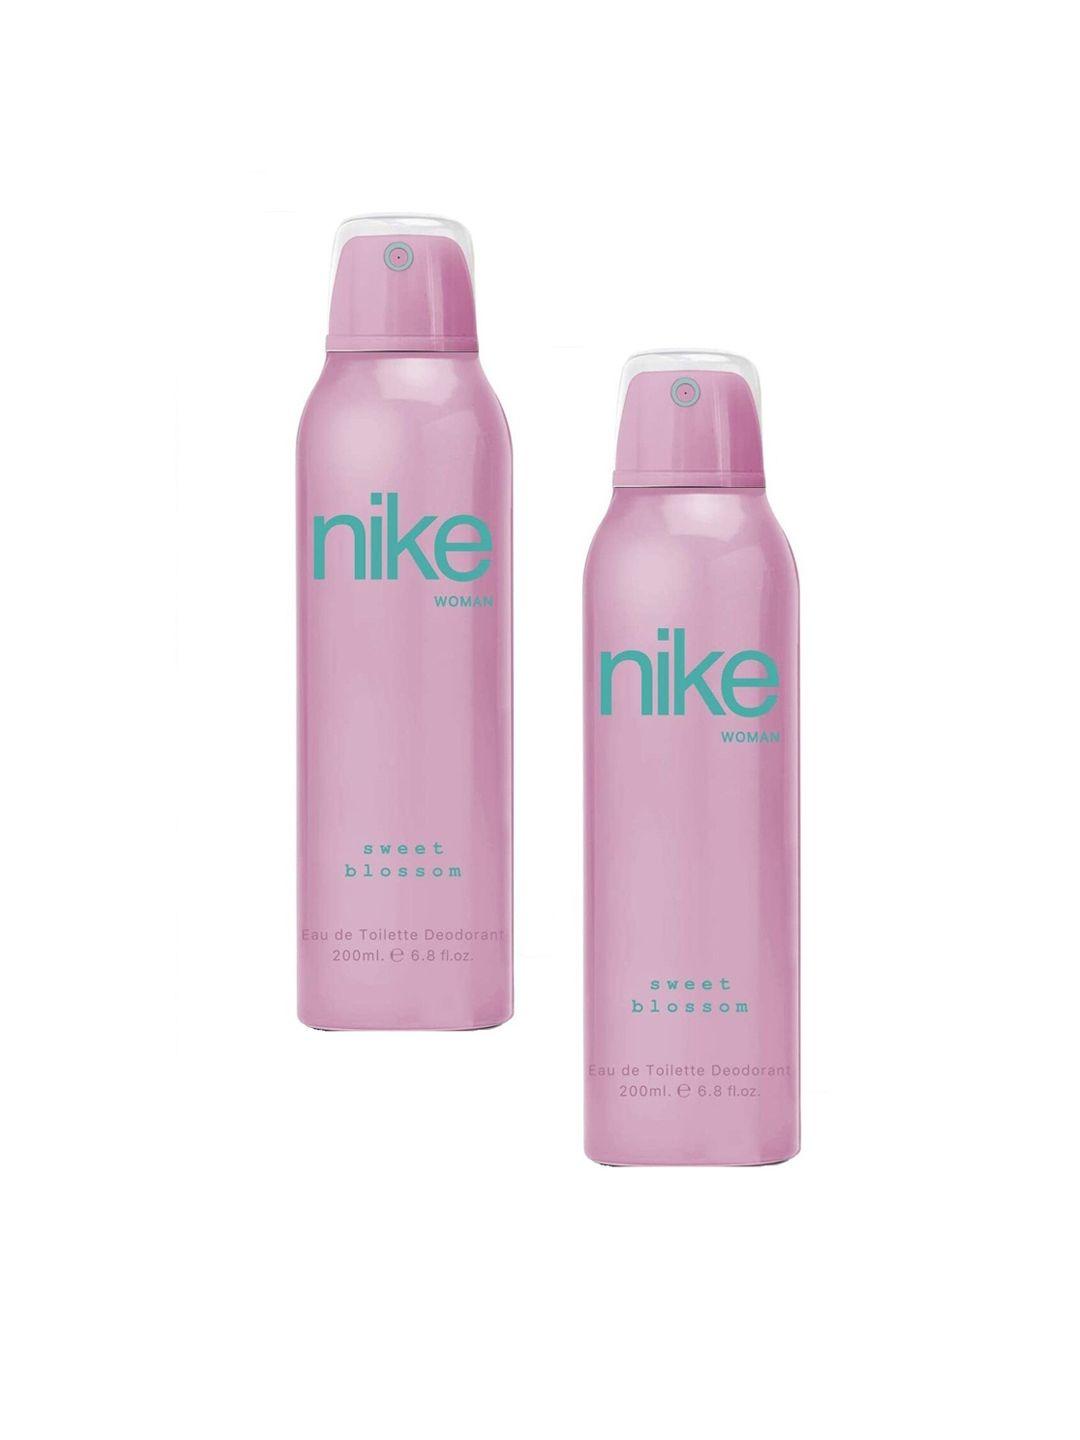 nike women pack of 2 sweet blossom deodorant - 200ml each